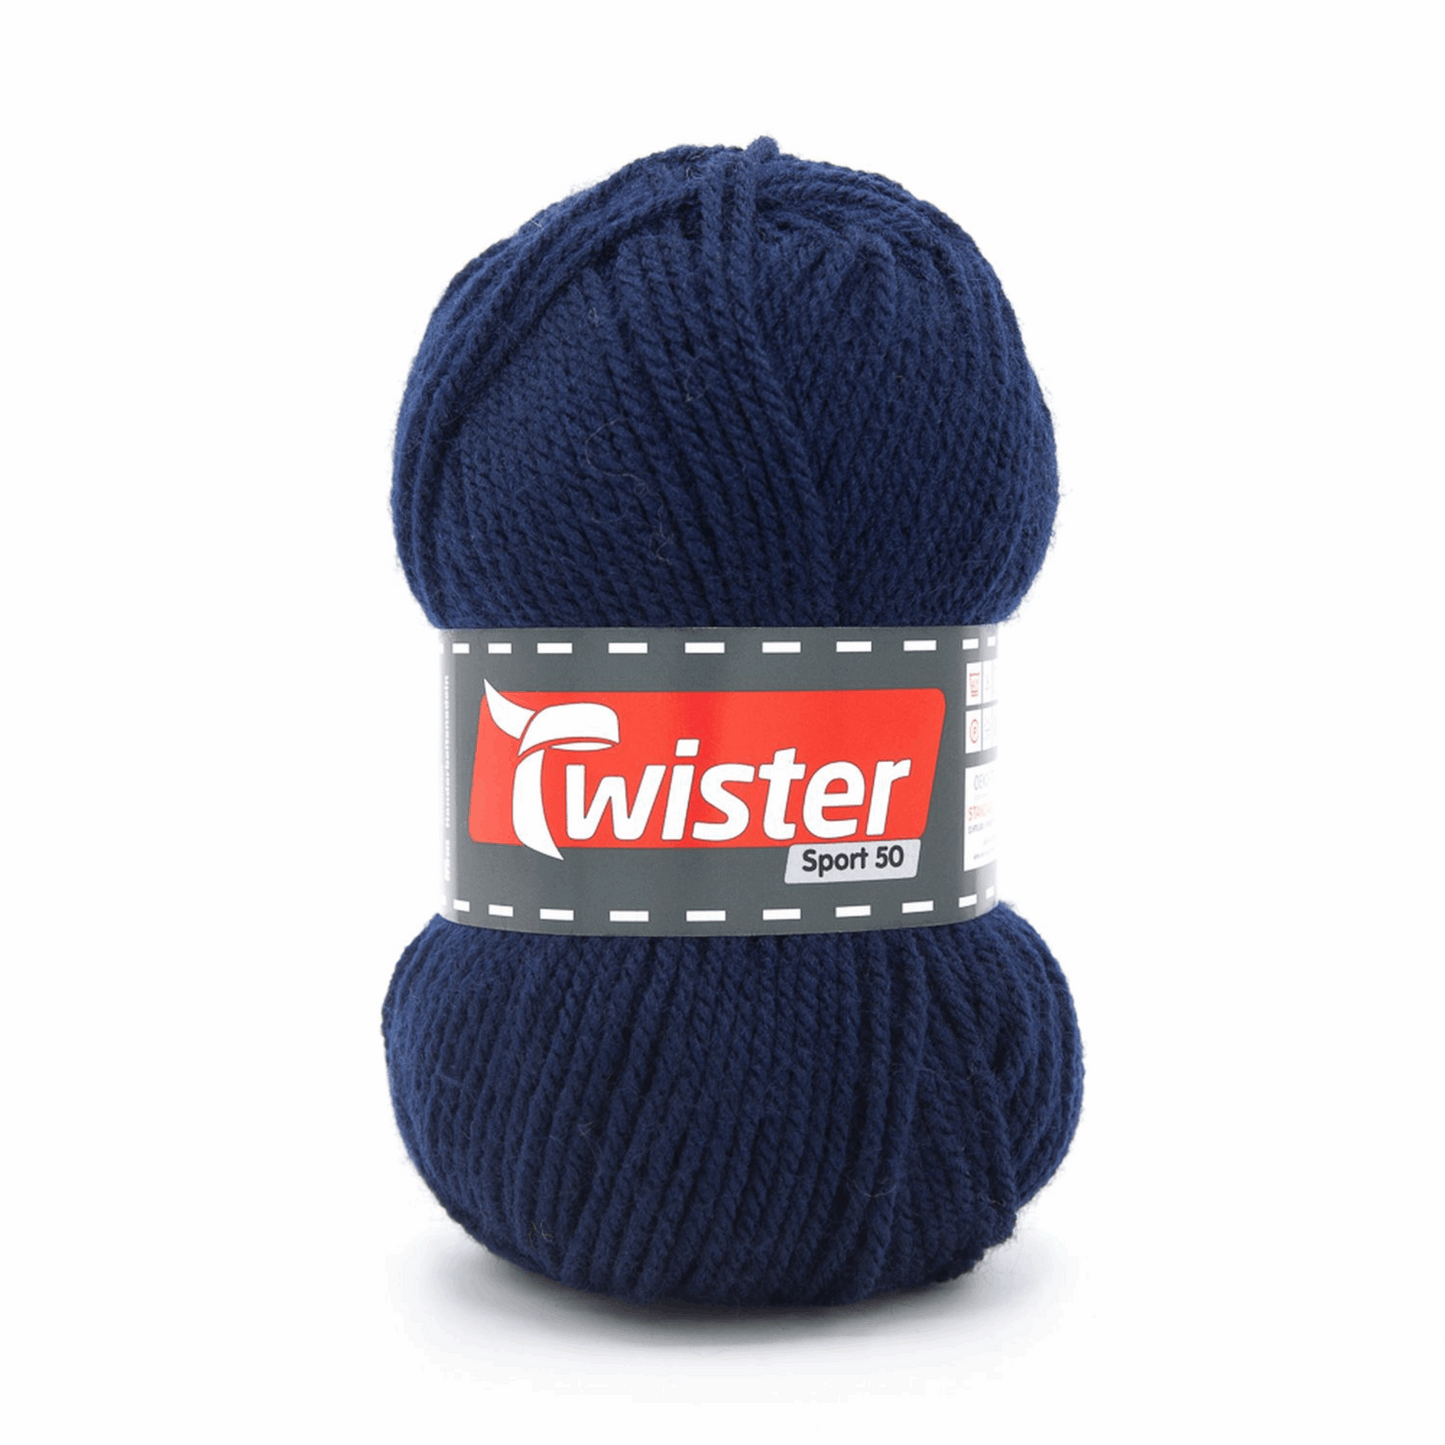 Twister Sport, 50g, 98304, Farbe marine 59